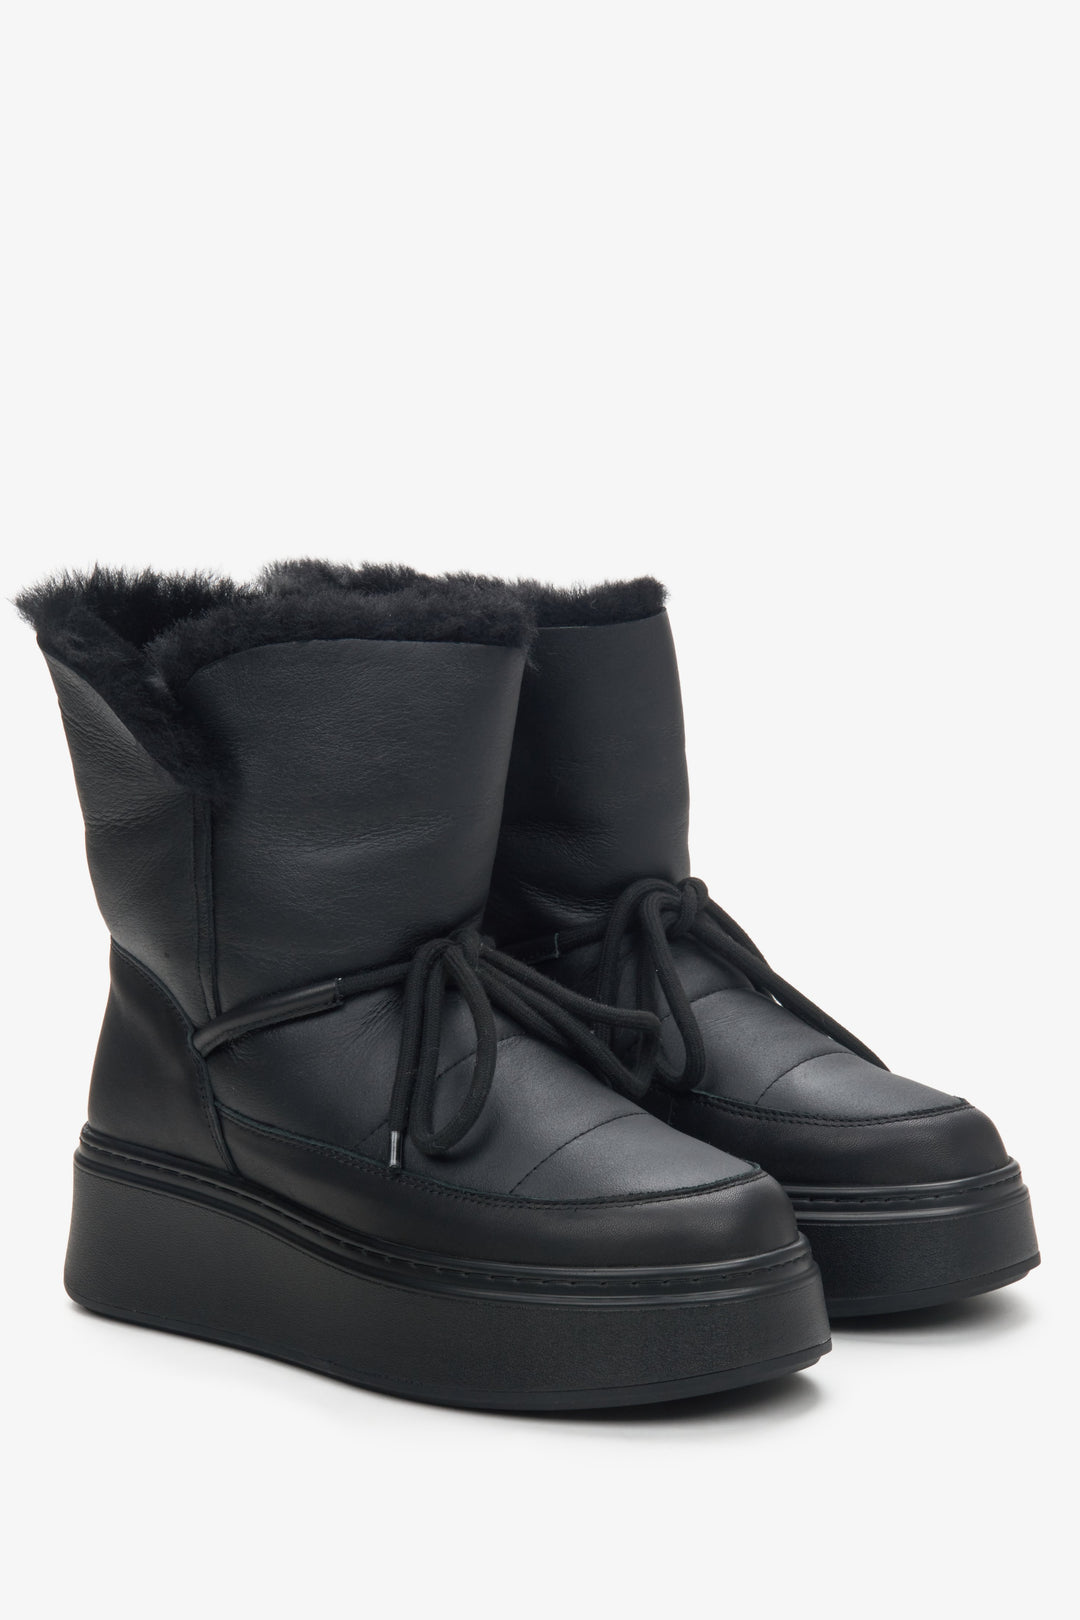 Women's black snow boots Estro.